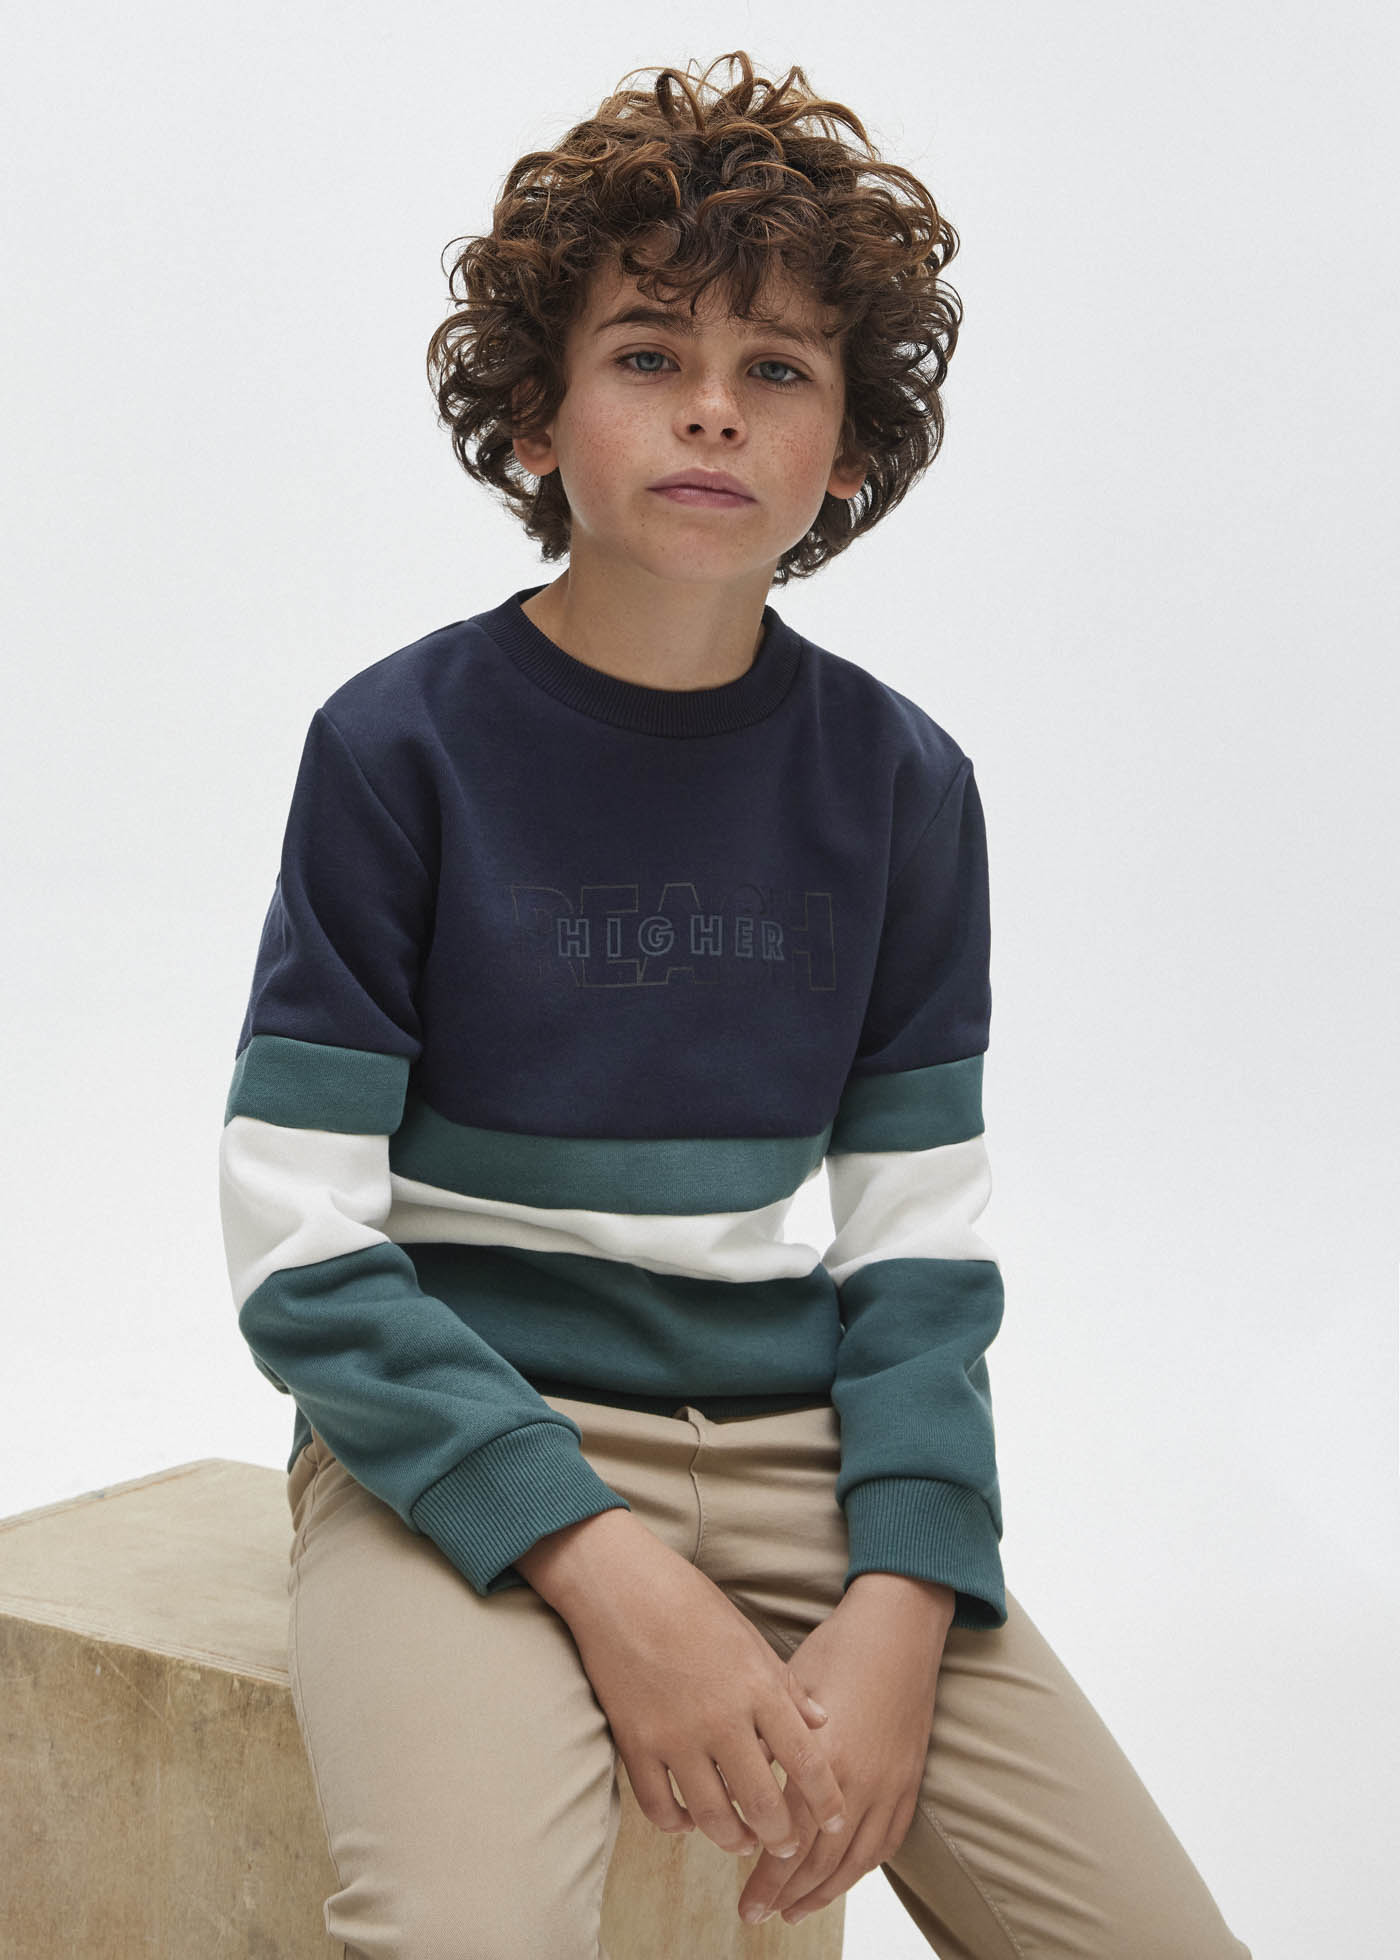 Sweatshirt Blockstreifen Farben Teenager Jungen